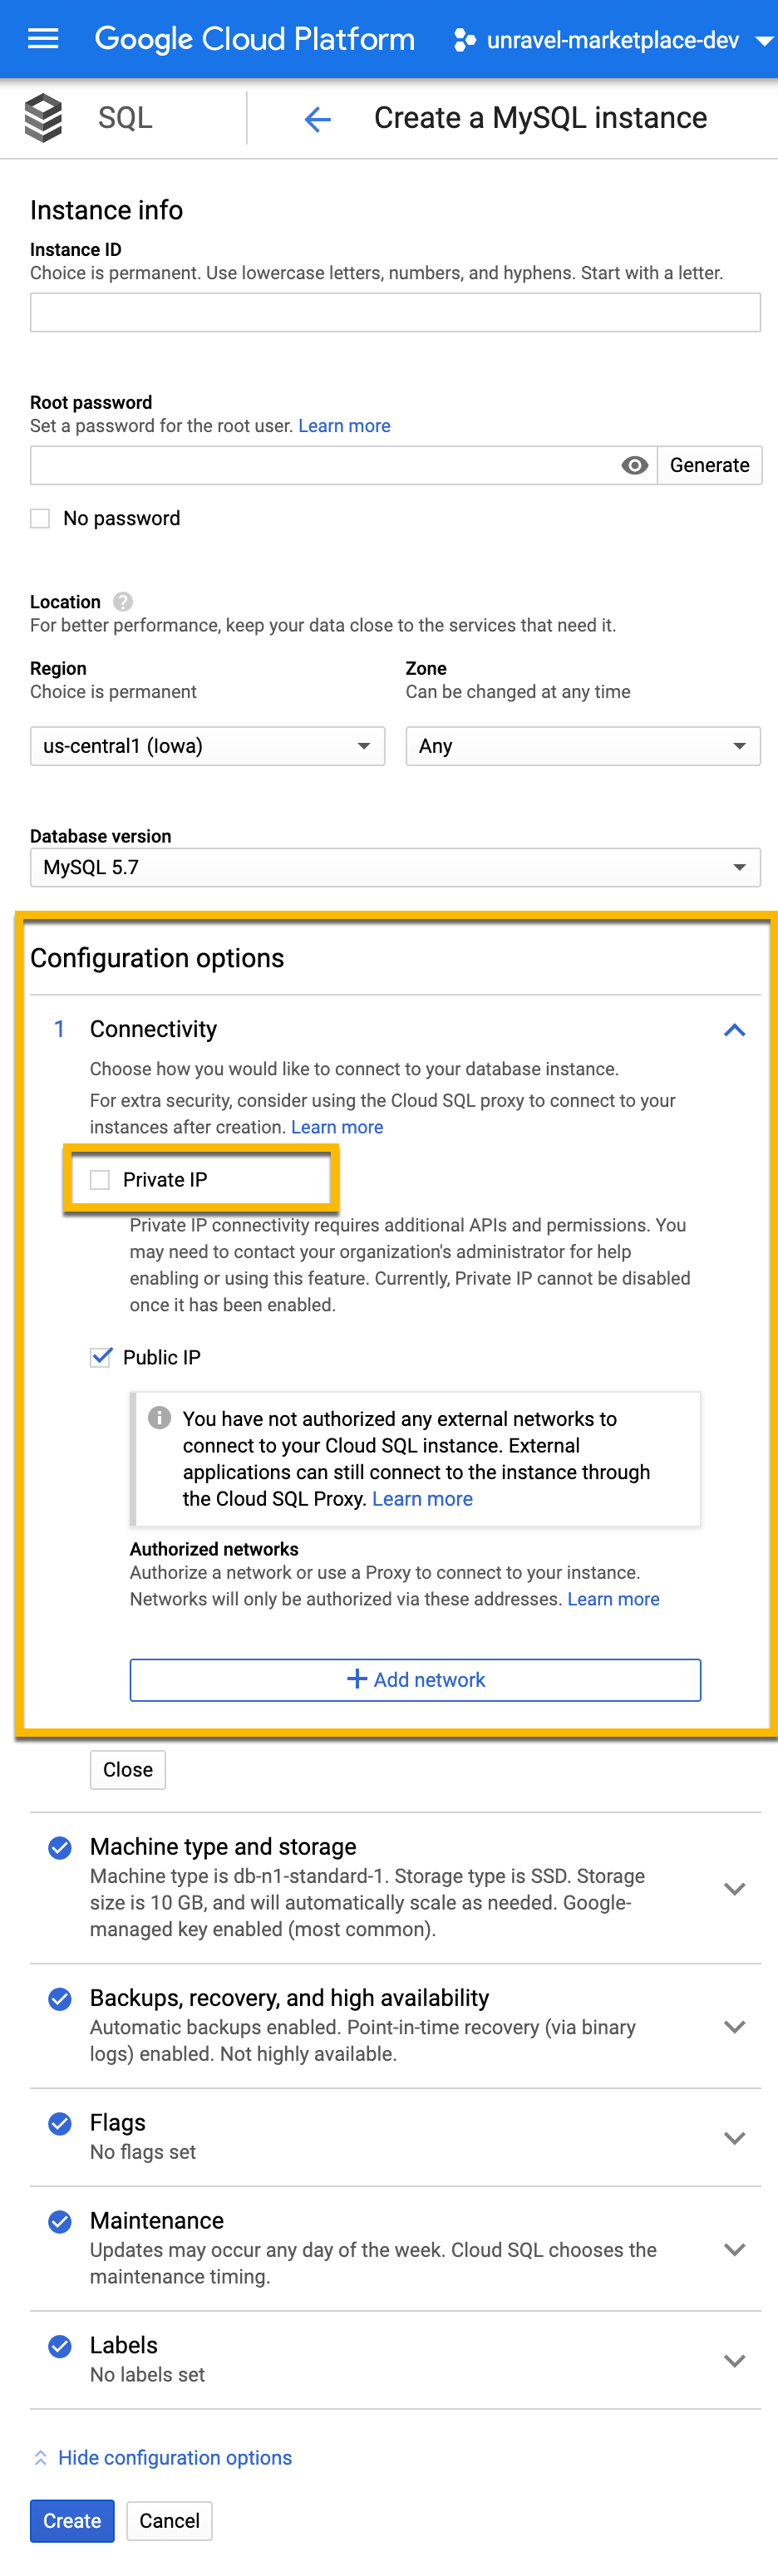 googledataproc-prereq-connectivity.png